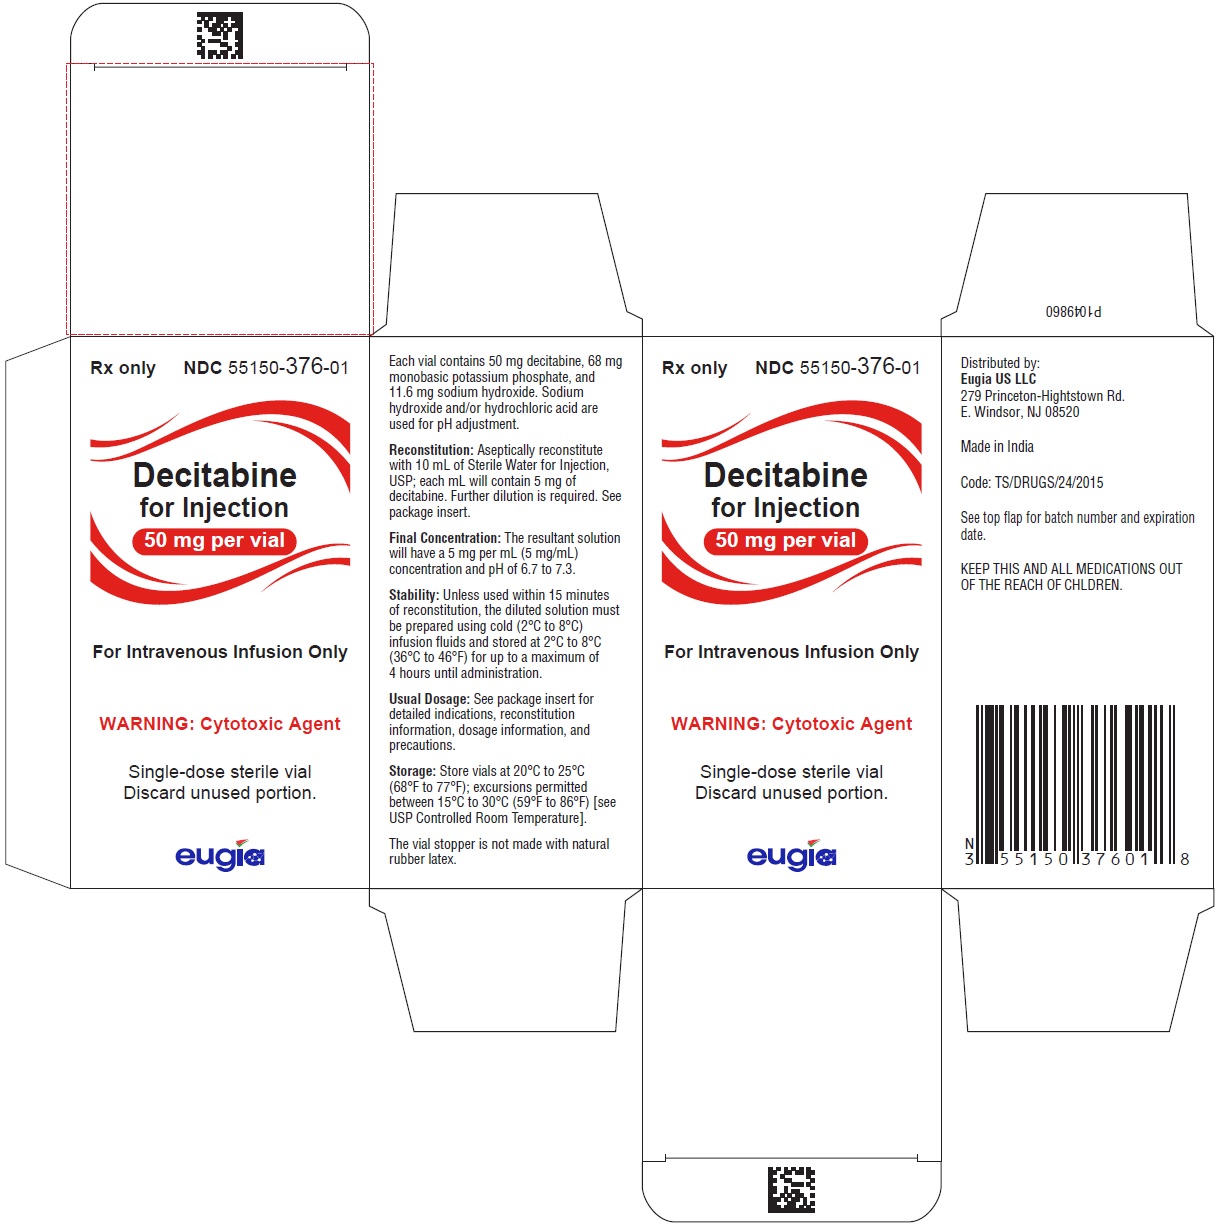 PACKAGE LABEL-PRINCIPAL DISPLAY PANEL-50 mg per vial - Container-Carton (1 Vial)